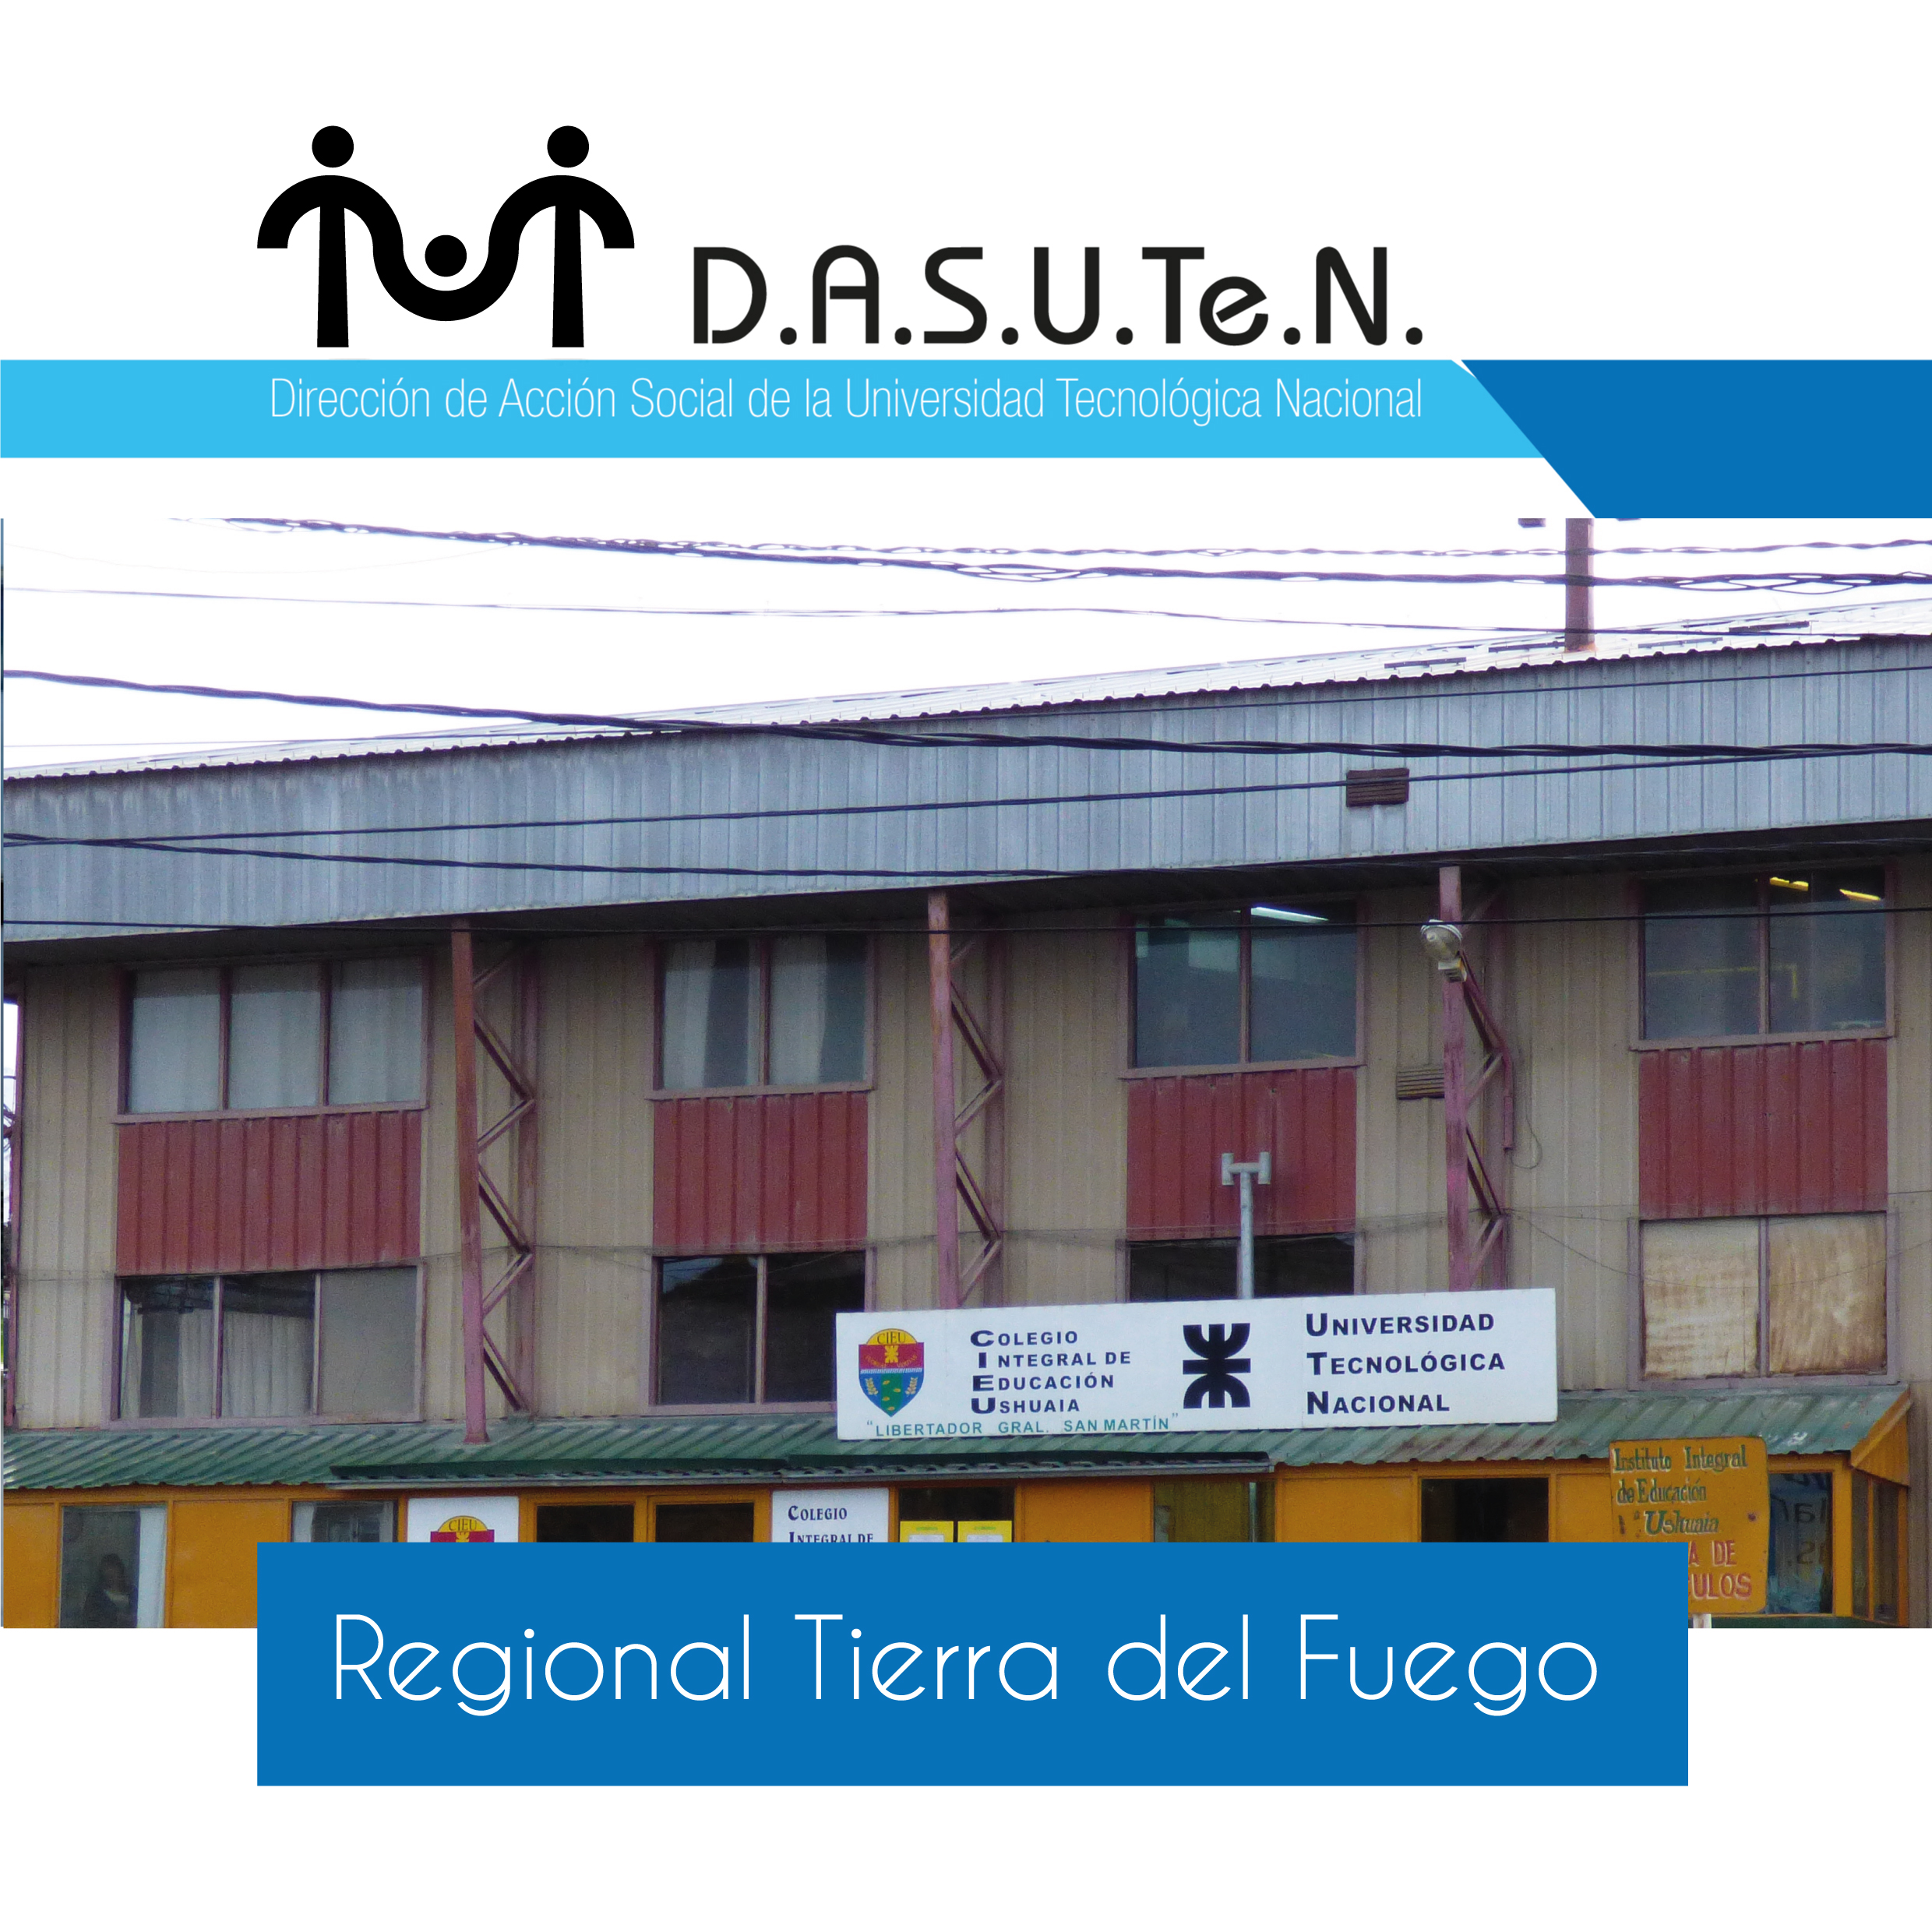 Facultad Regional Buenos Aires